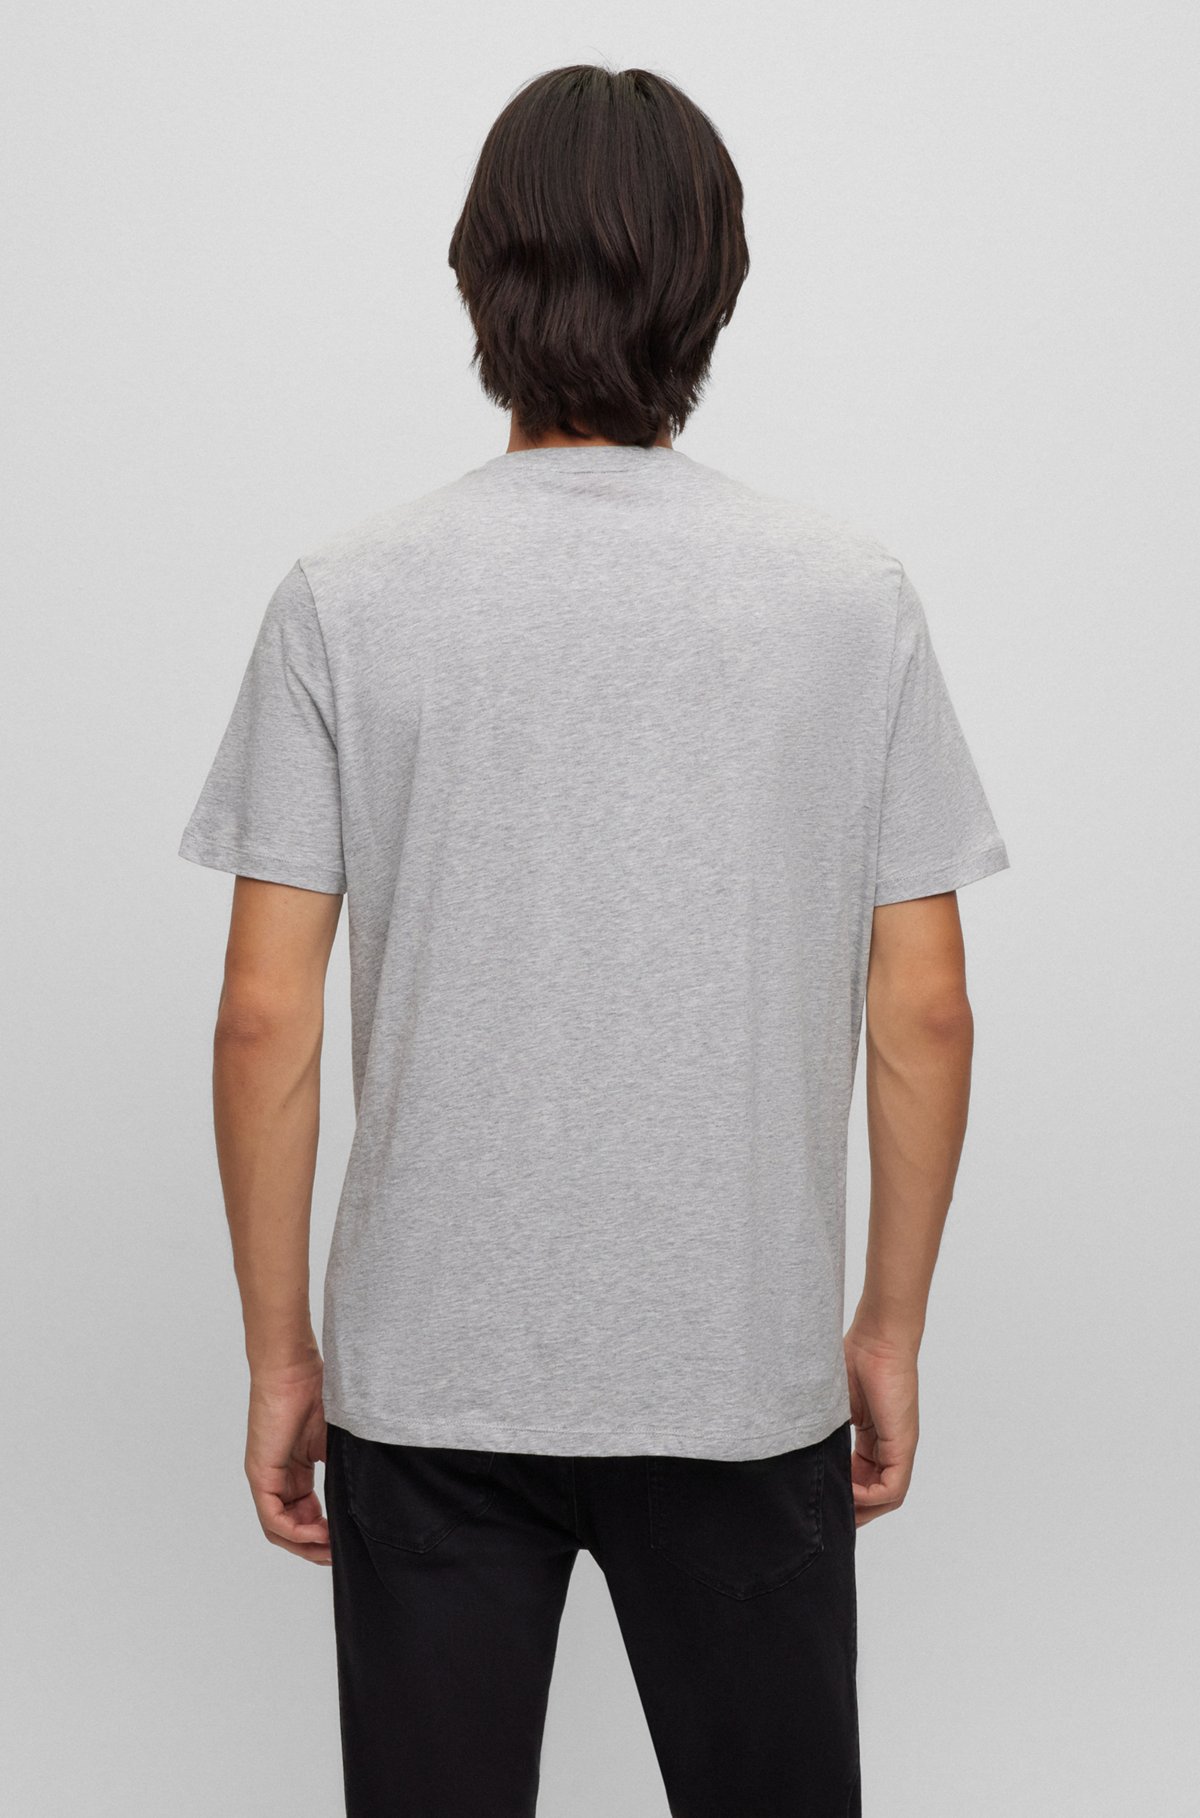 HUGO - Cotton-jersey regular-fit T-shirt with contrast logo